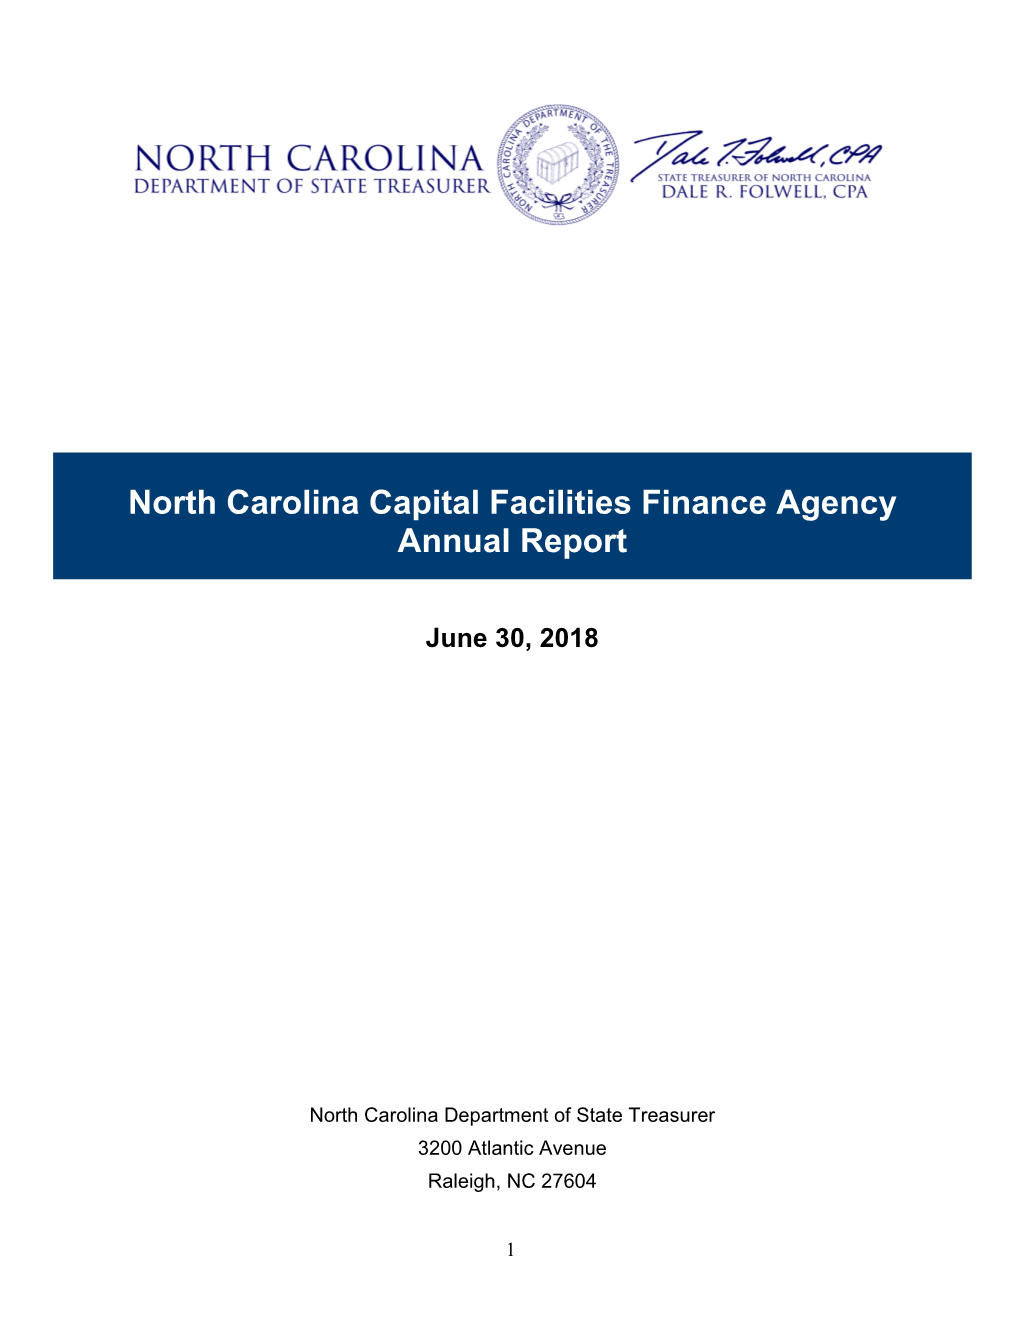 North Carolina Capital Facilities Finance Agency Annual Report